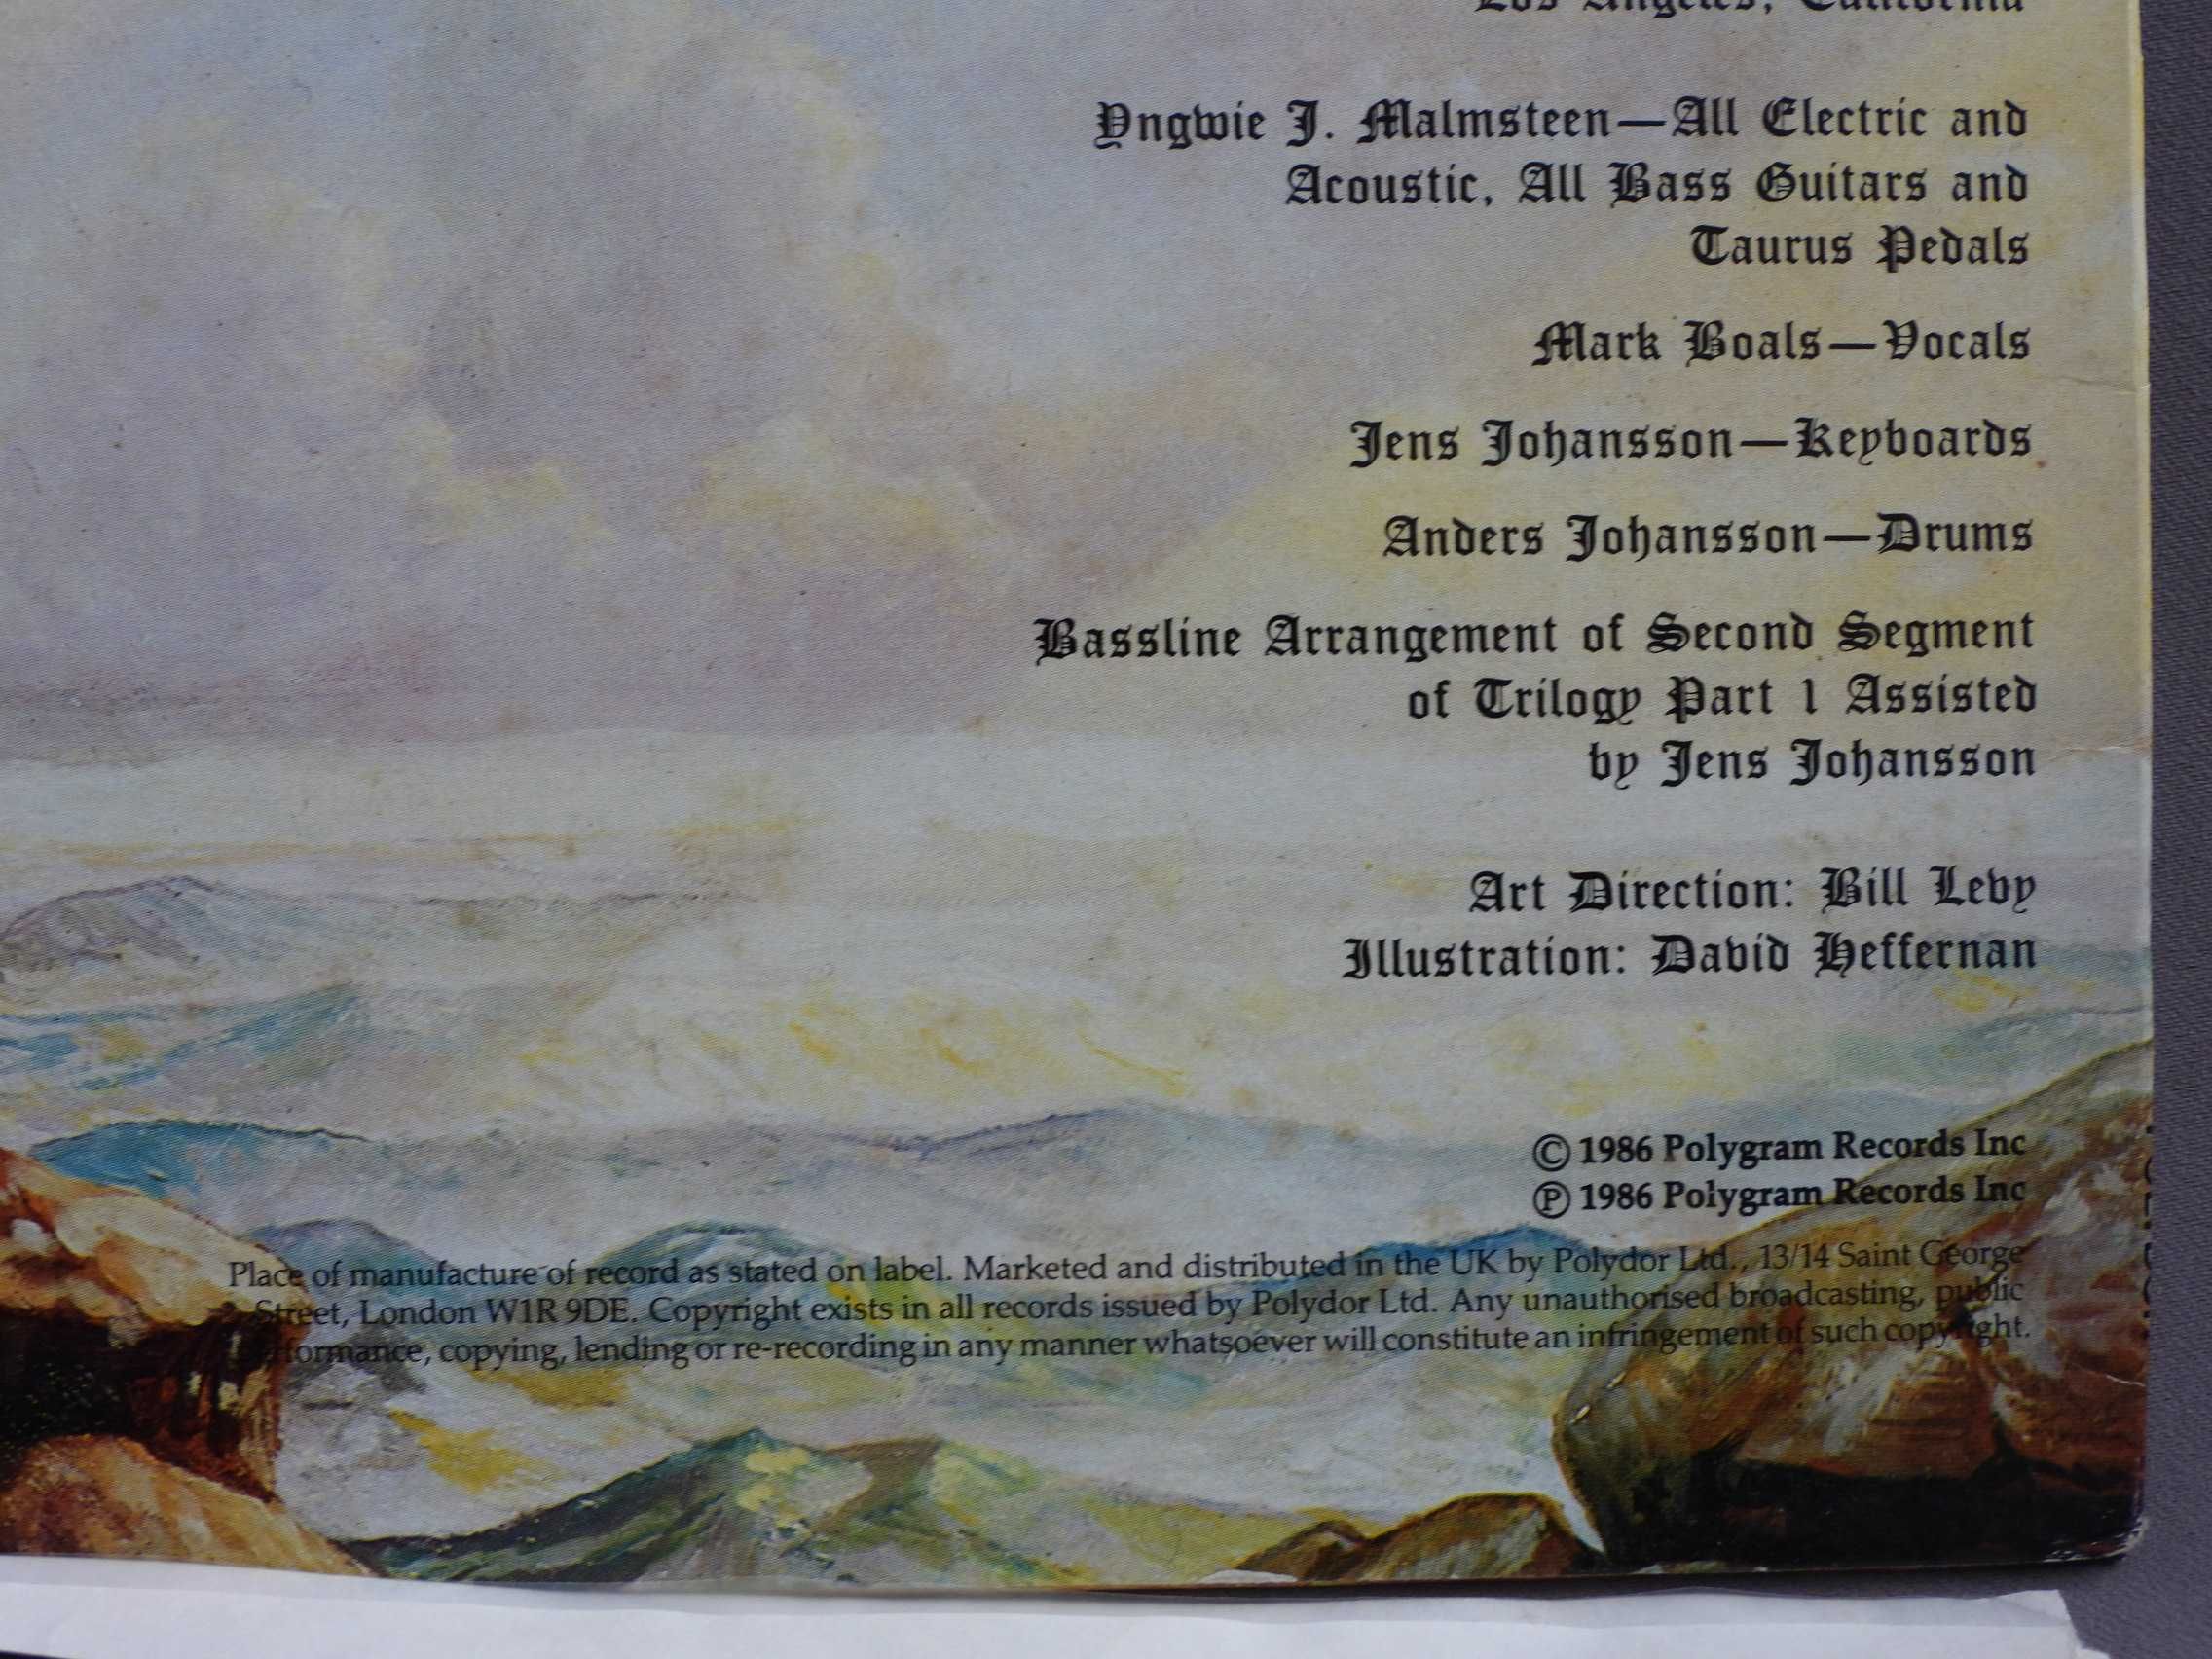 Yngwie Malmsteen Trilogy LP 1986 UK пластинка EX Британия 1st press